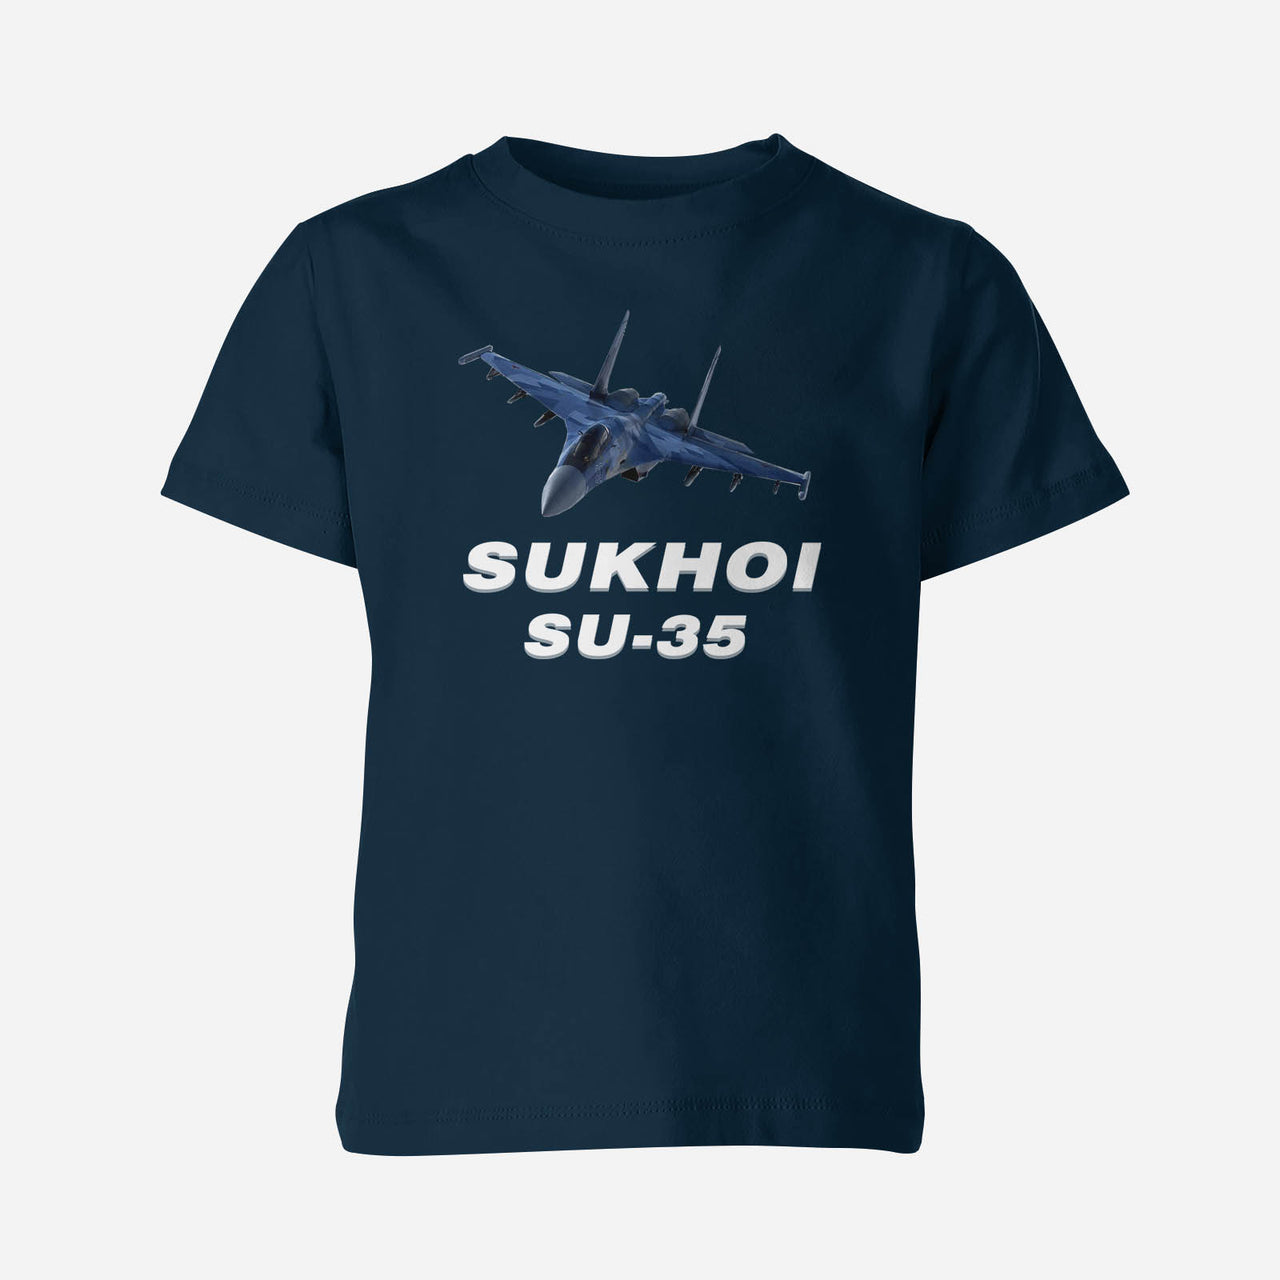 The Sukhoi SU-35 Designed Children T-Shirts